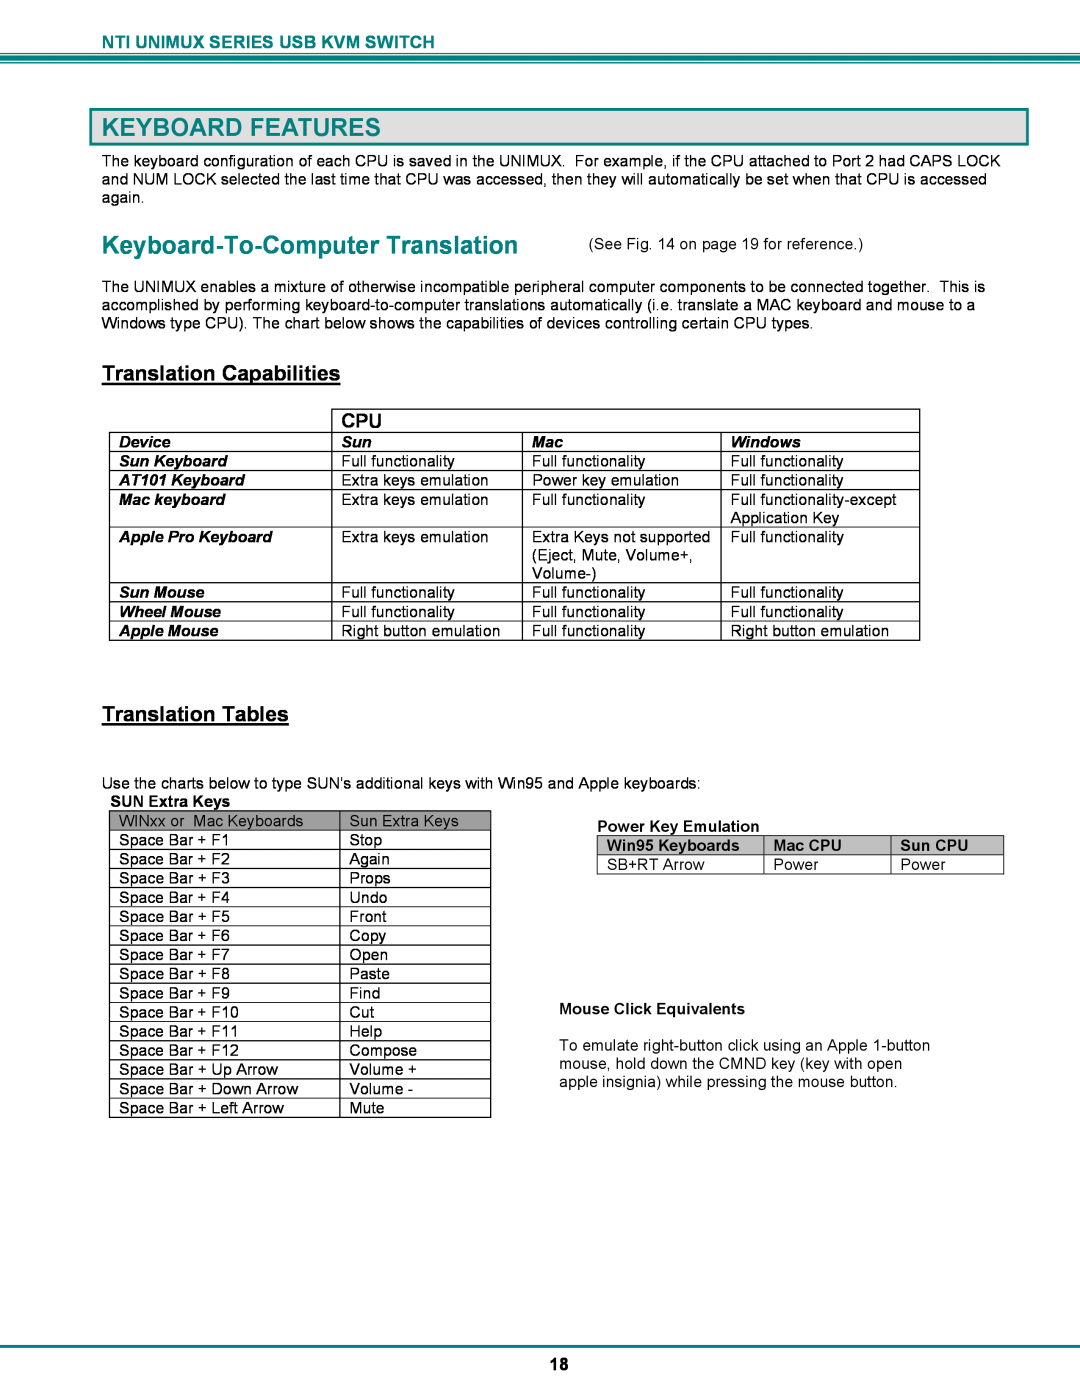 Network Technologies UNIMUX-DVI-xHD Keyboard Features, Keyboard-To-Computer Translation, Translation Capabilities 